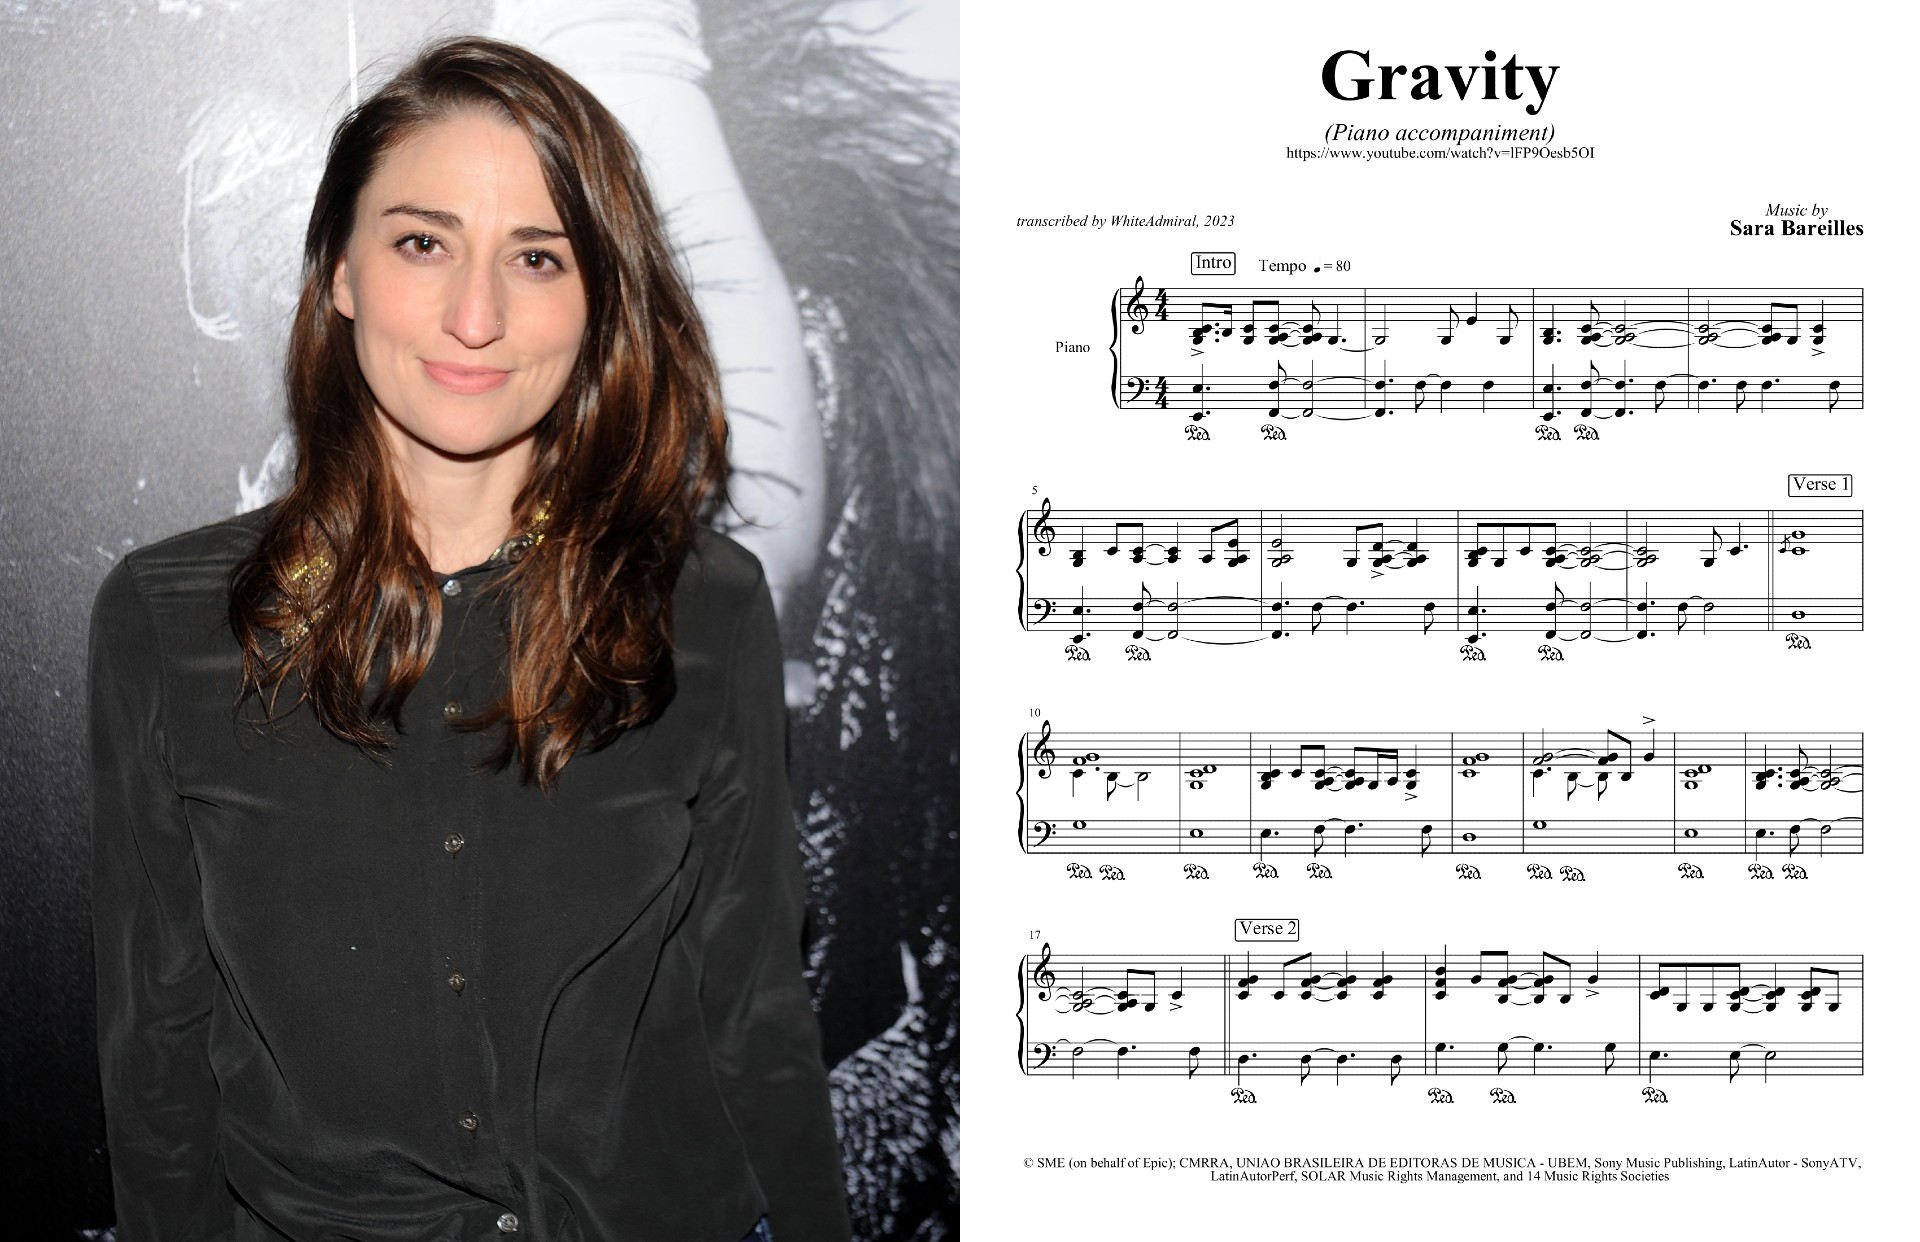 Gravity (piano acc.) - Sara Bareilles.jpg